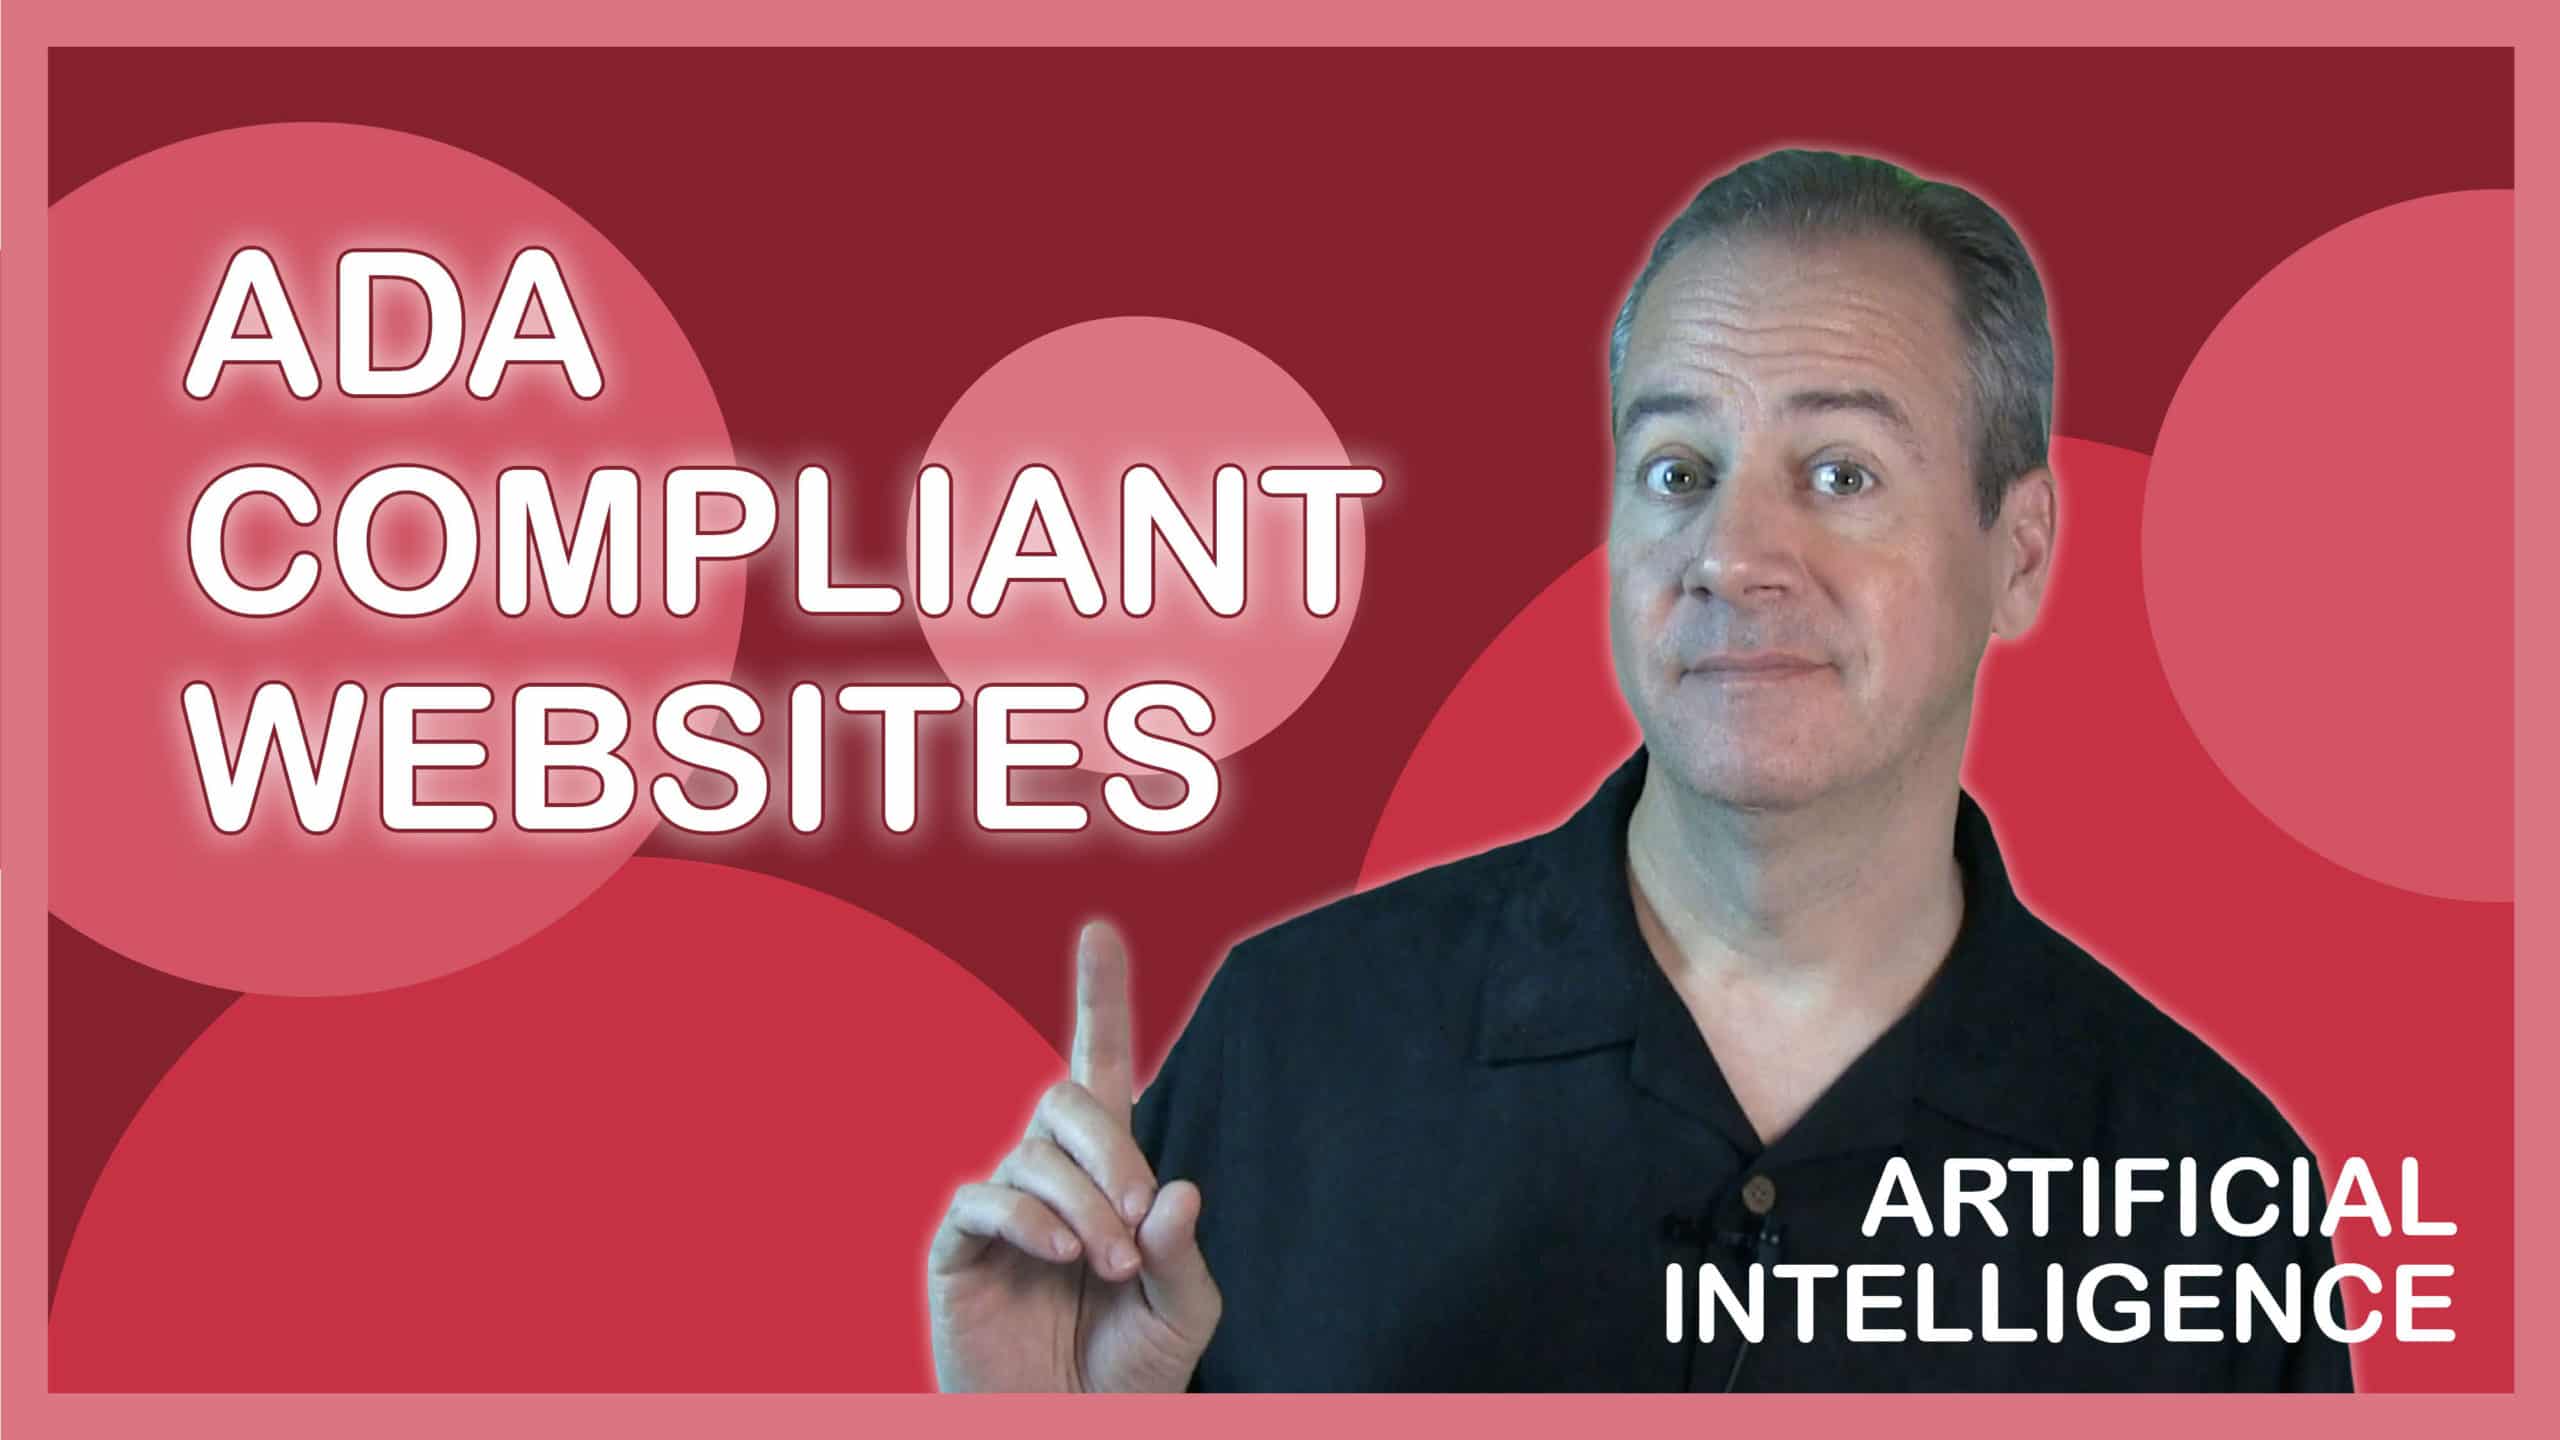 ADA Compliant Websites and AI